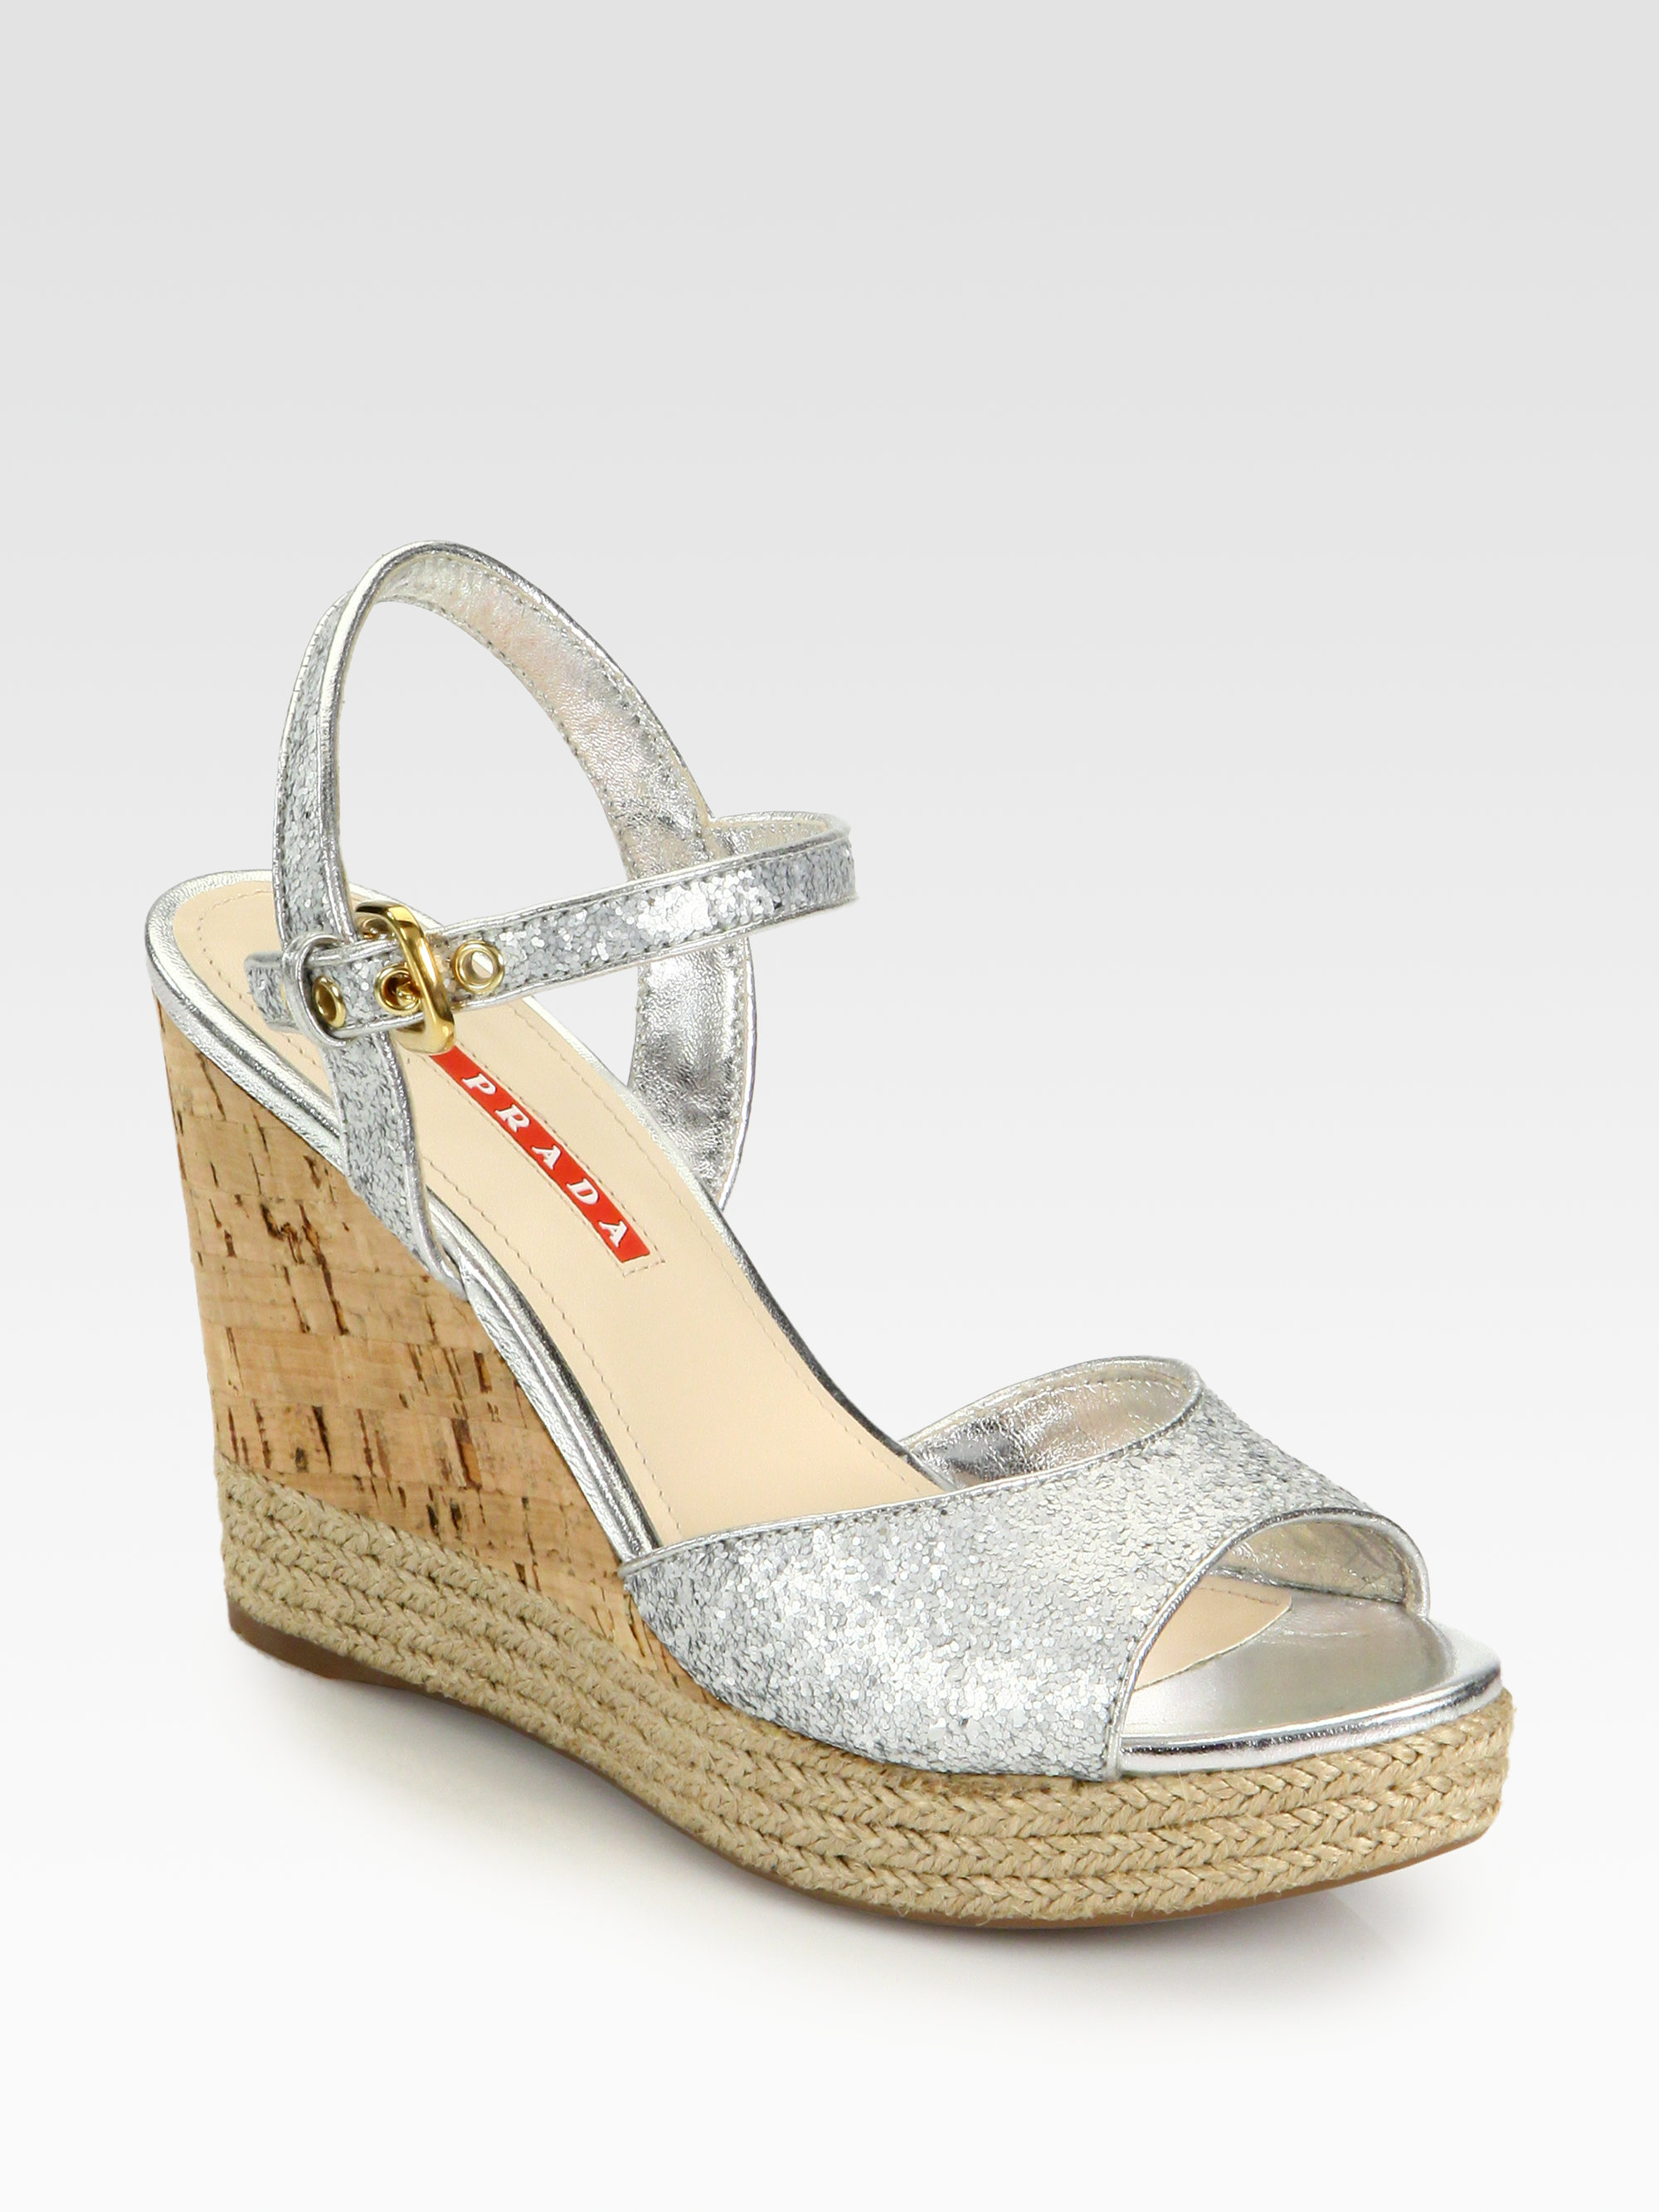 Prada Glitter Cork Wedge Sandals in Metallic - Lyst